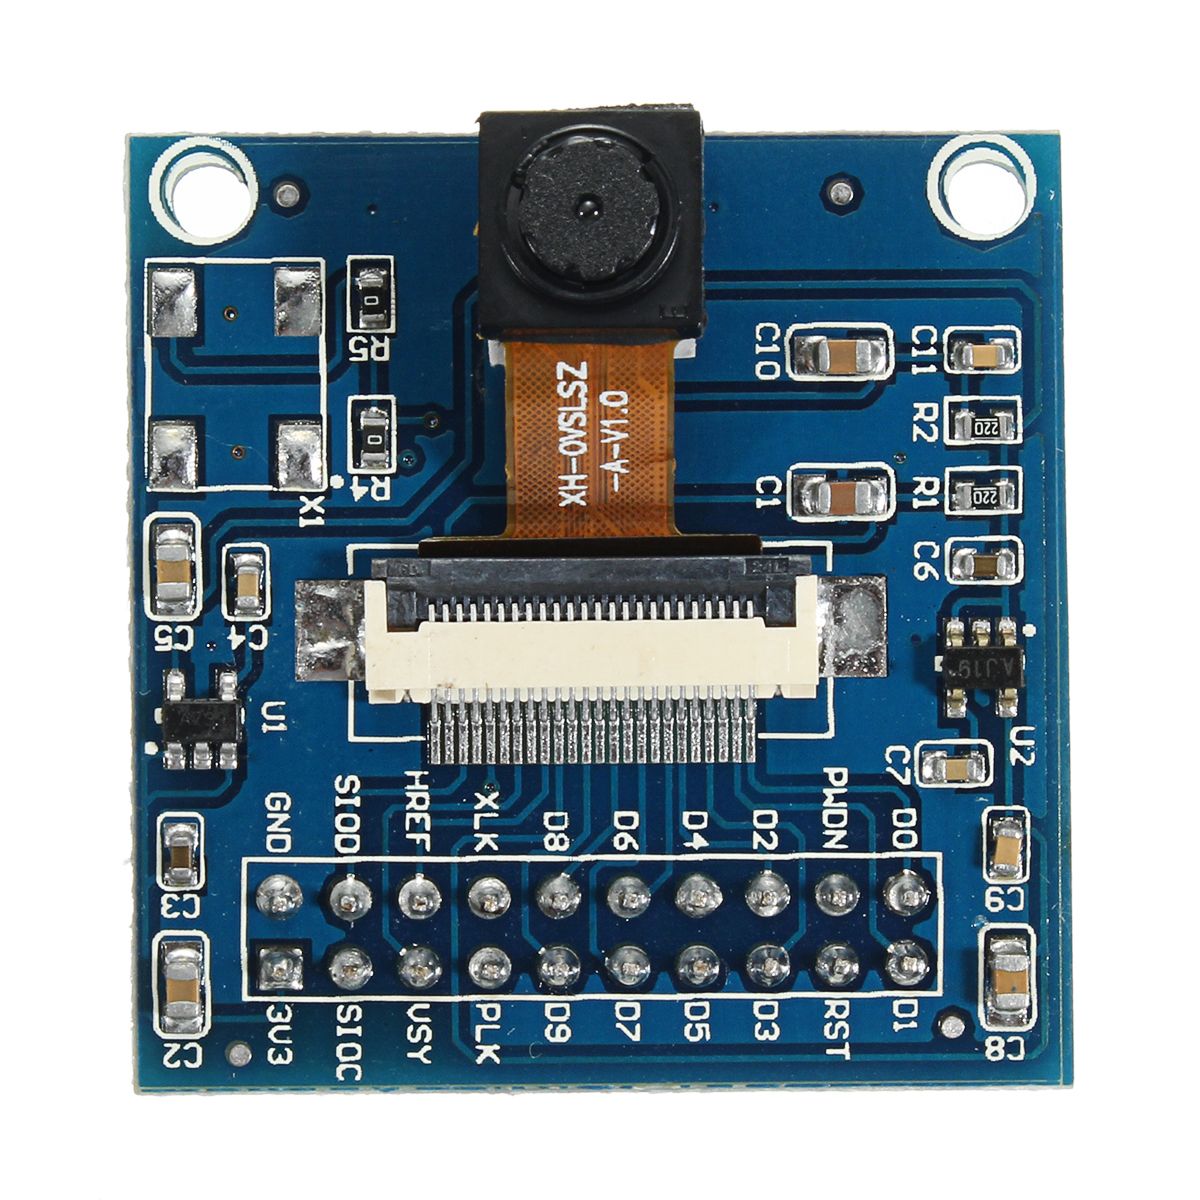 3pcs-VGA-OV7670-CMOS-Camera-Module-Lens-CMOS-640X480-SCCB-With-I2C-Interface-1321997